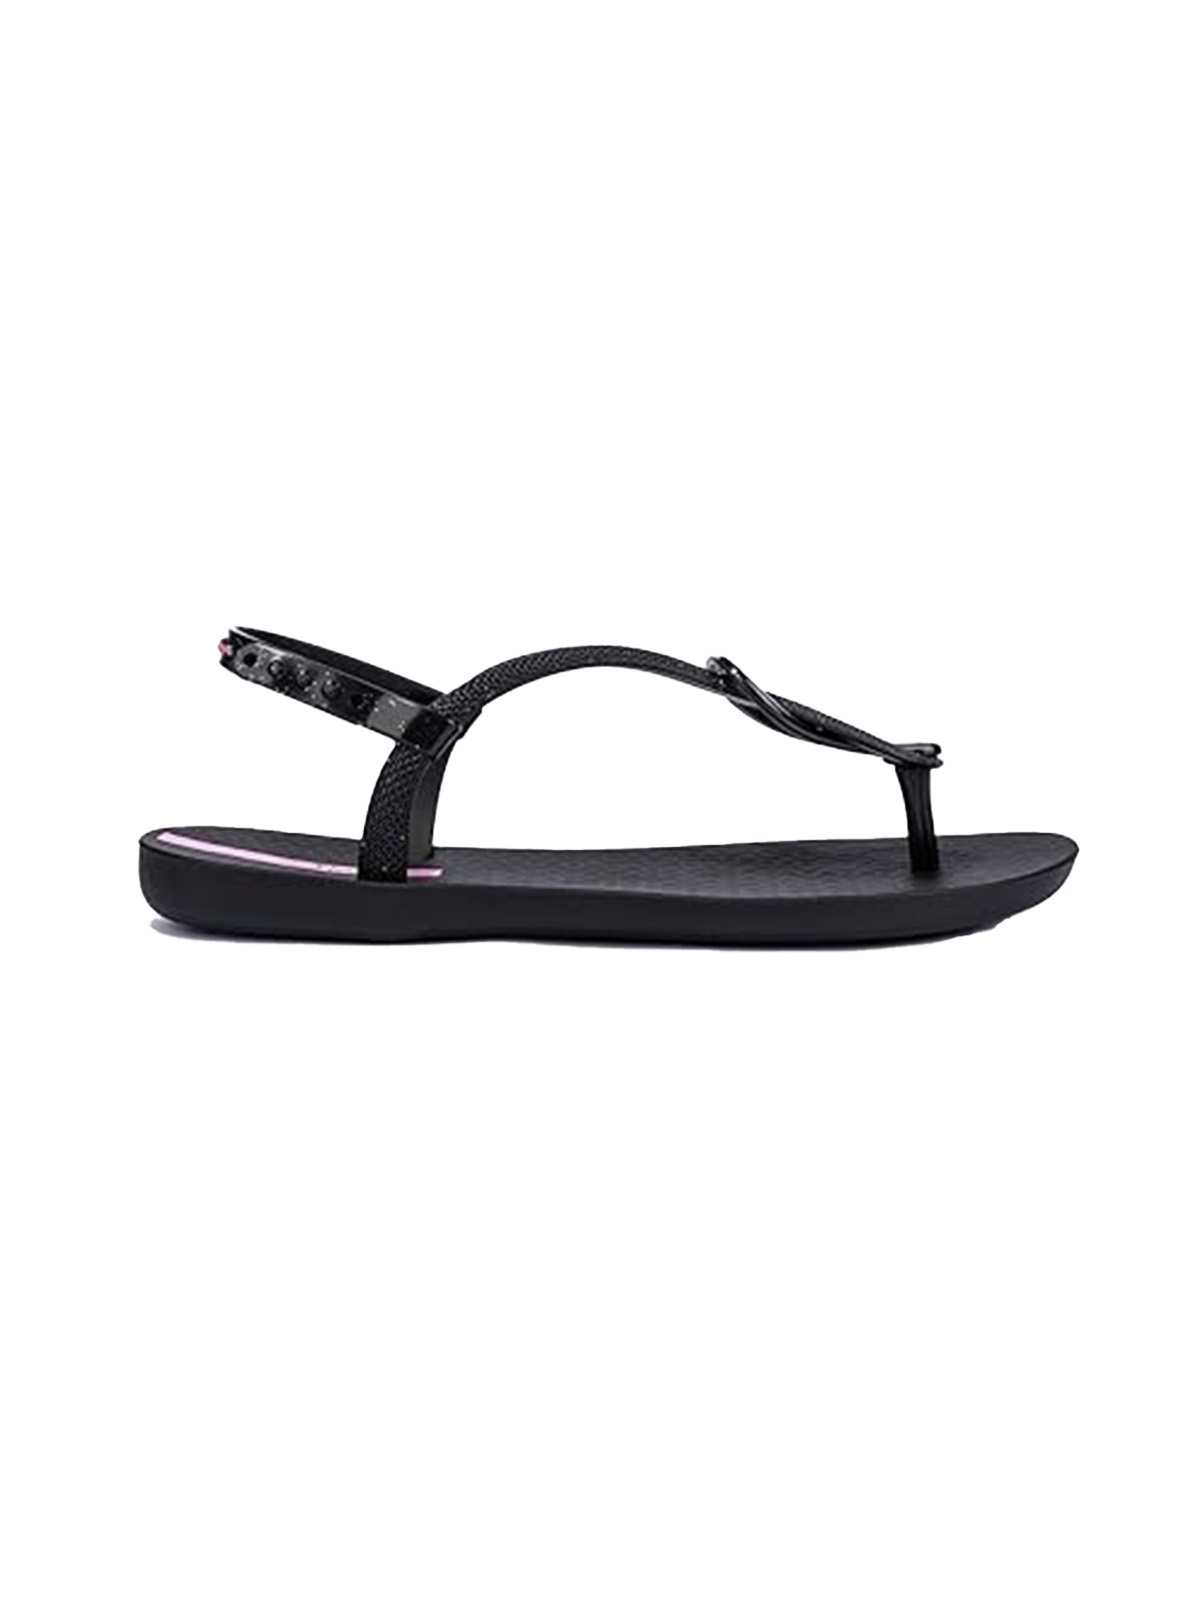 Black Amazon thong sandals